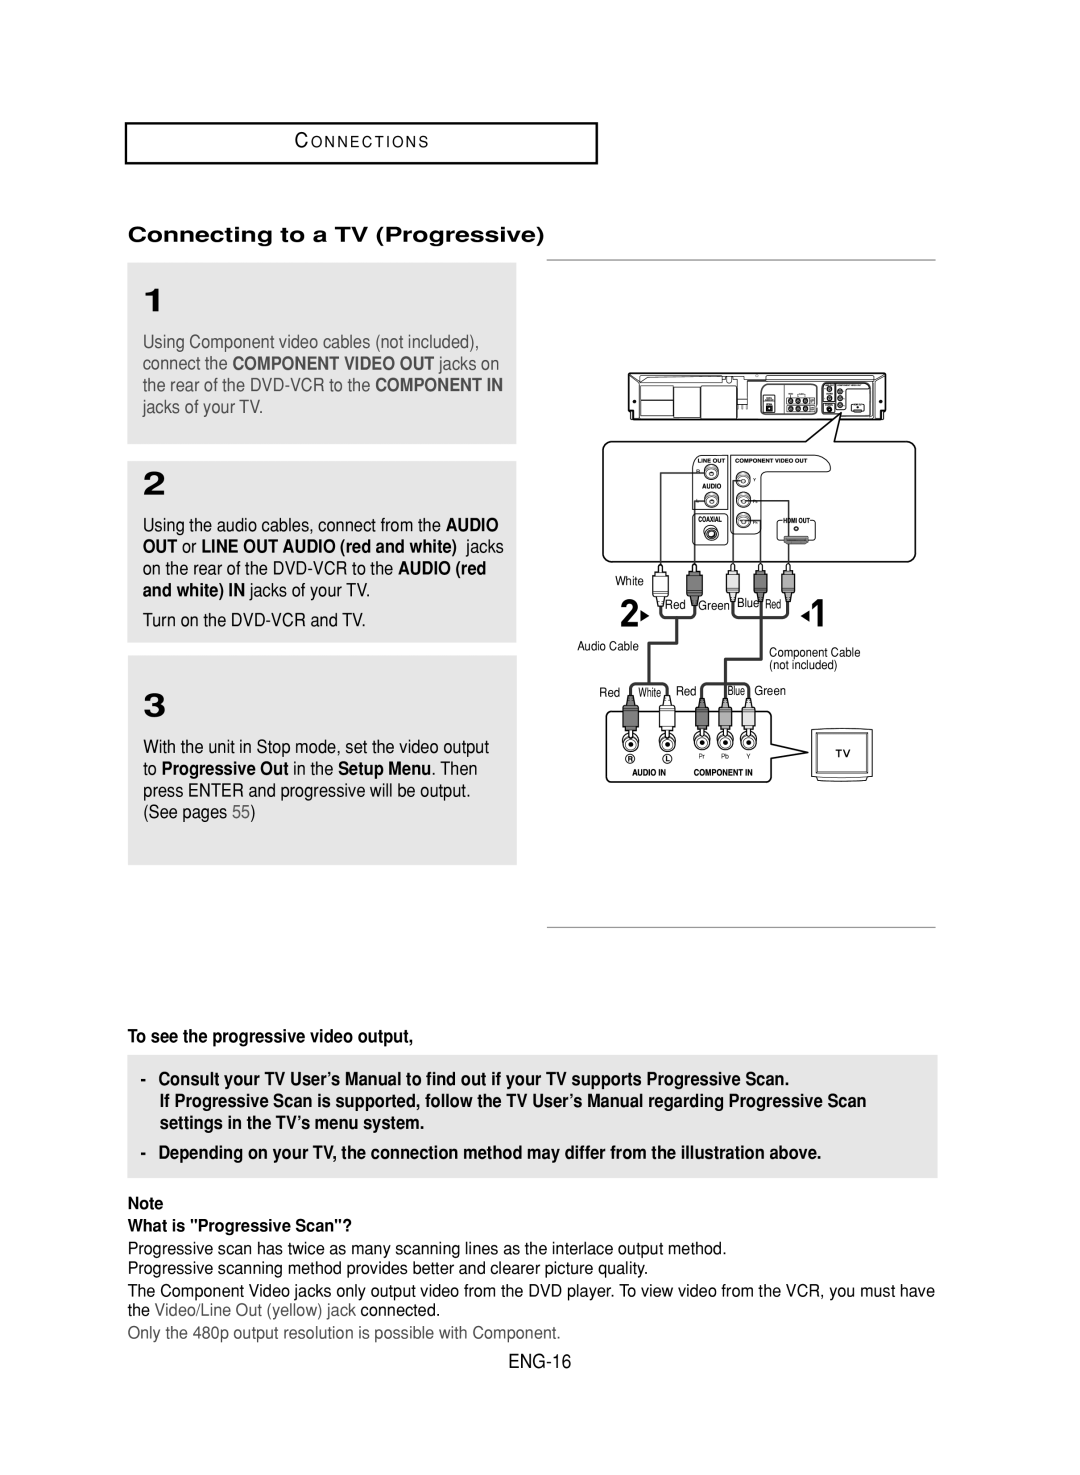 Samsung DVD-V9800 instruction manual Connecting to a TV Progressive, ENG-16 